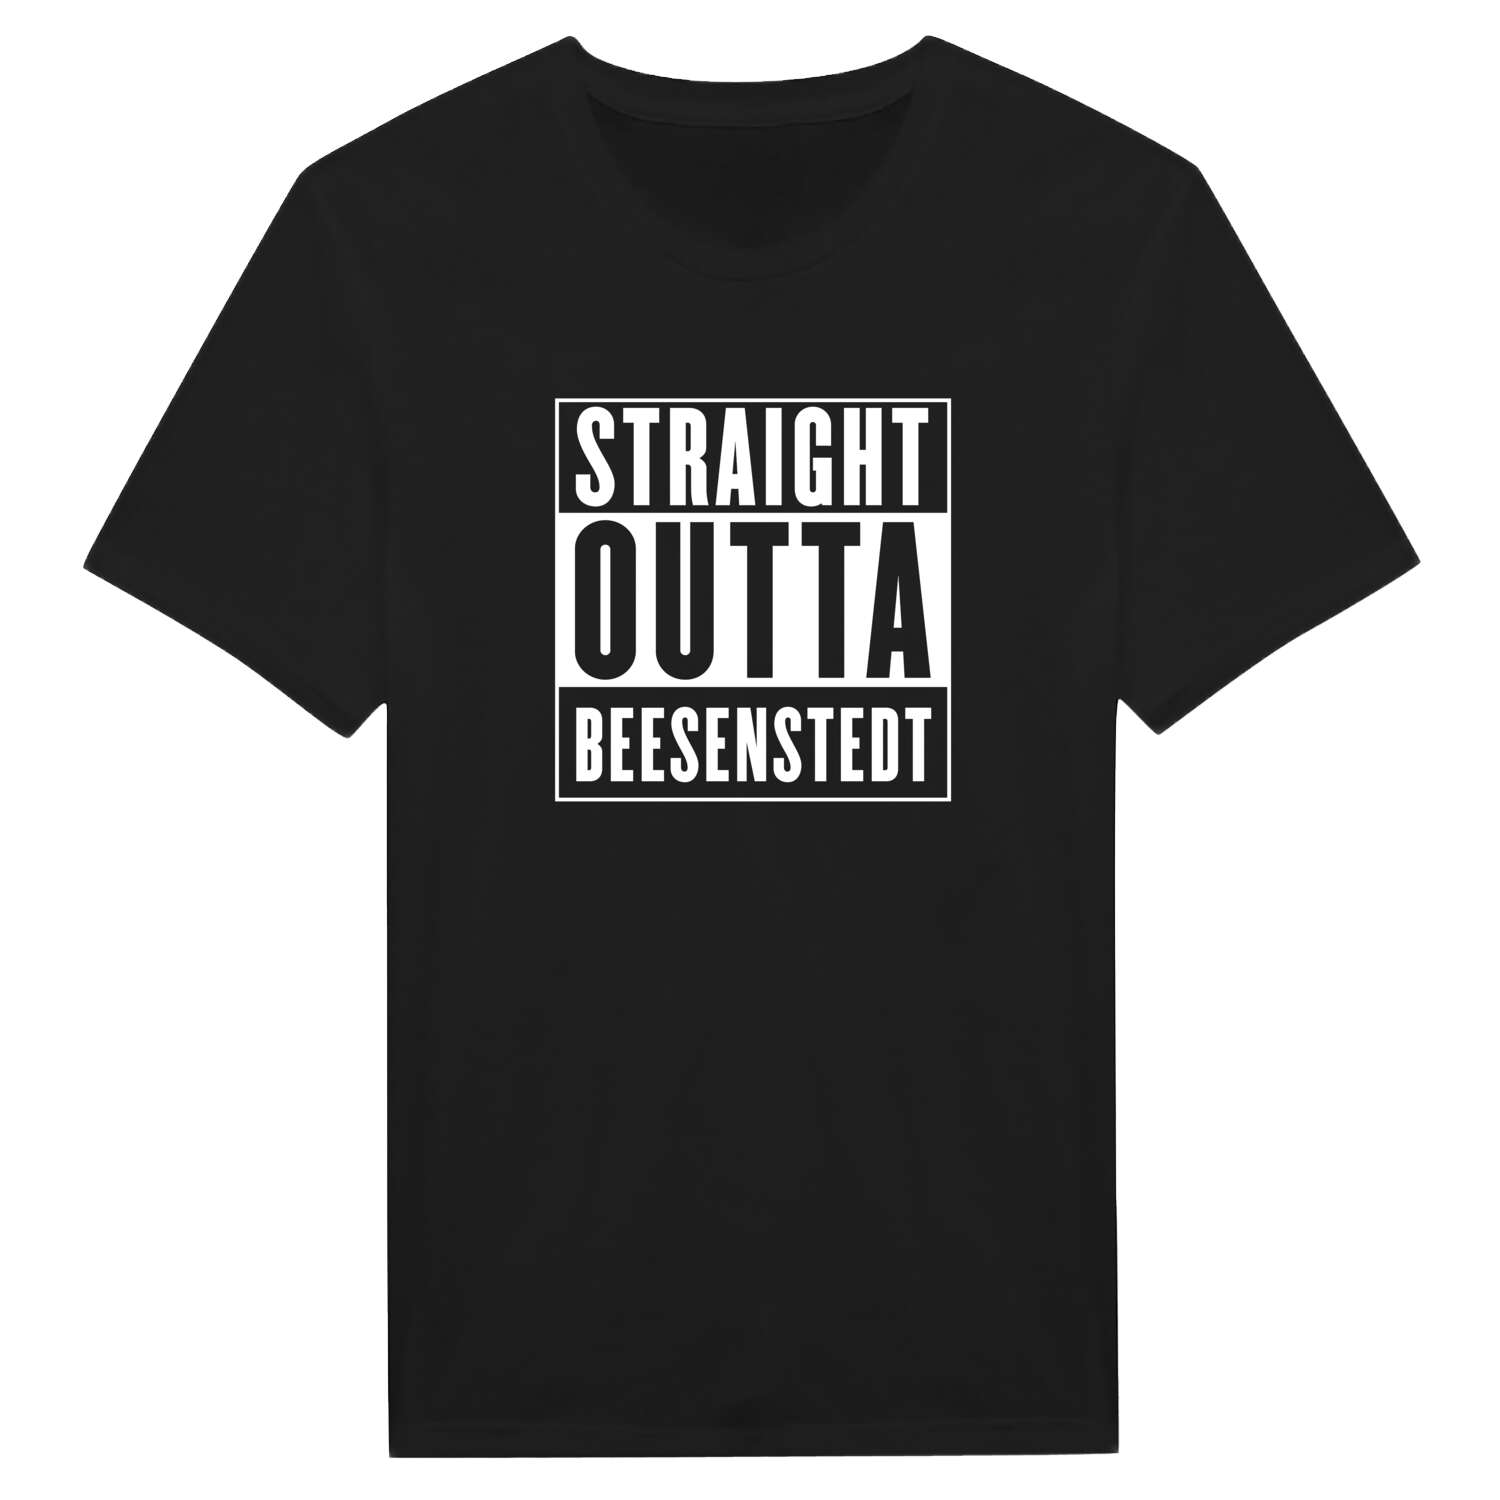 Beesenstedt T-Shirt »Straight Outta«